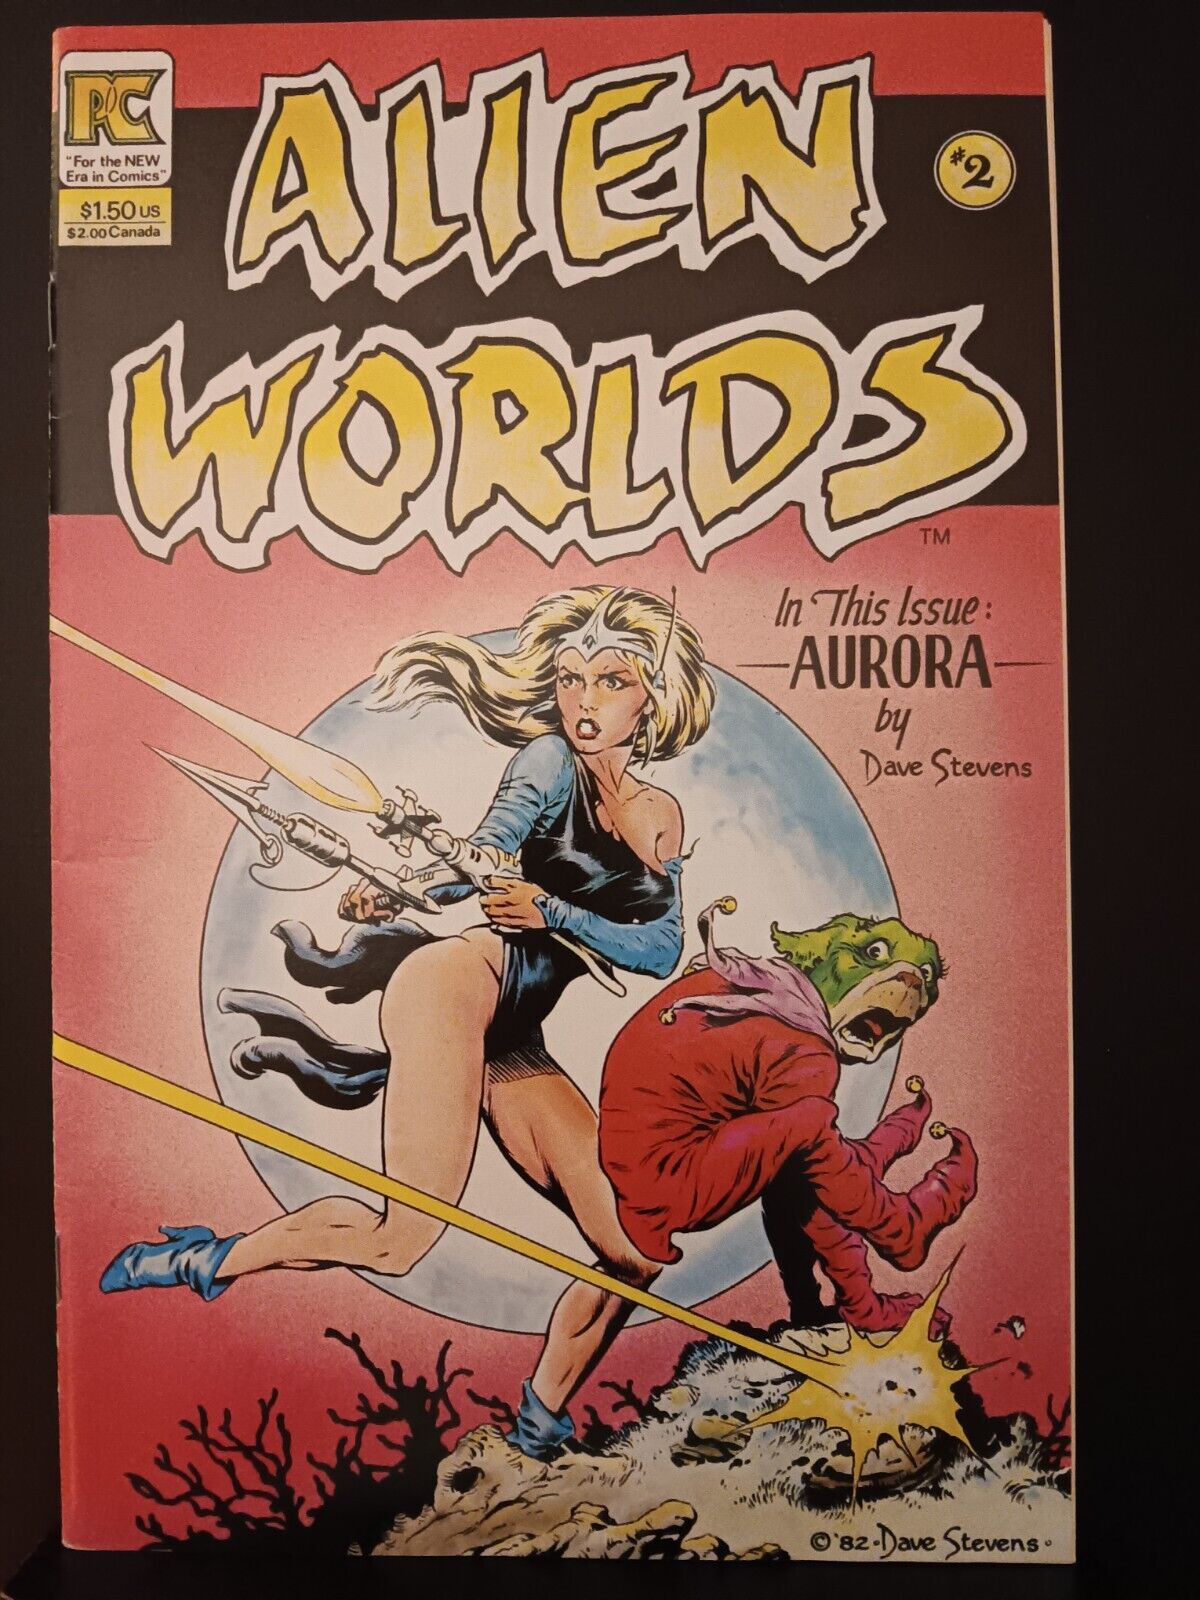 ALIEN WORLDS #2 VF 8.5 Dave Stevens Cover and Interior Art HOT PC Comics